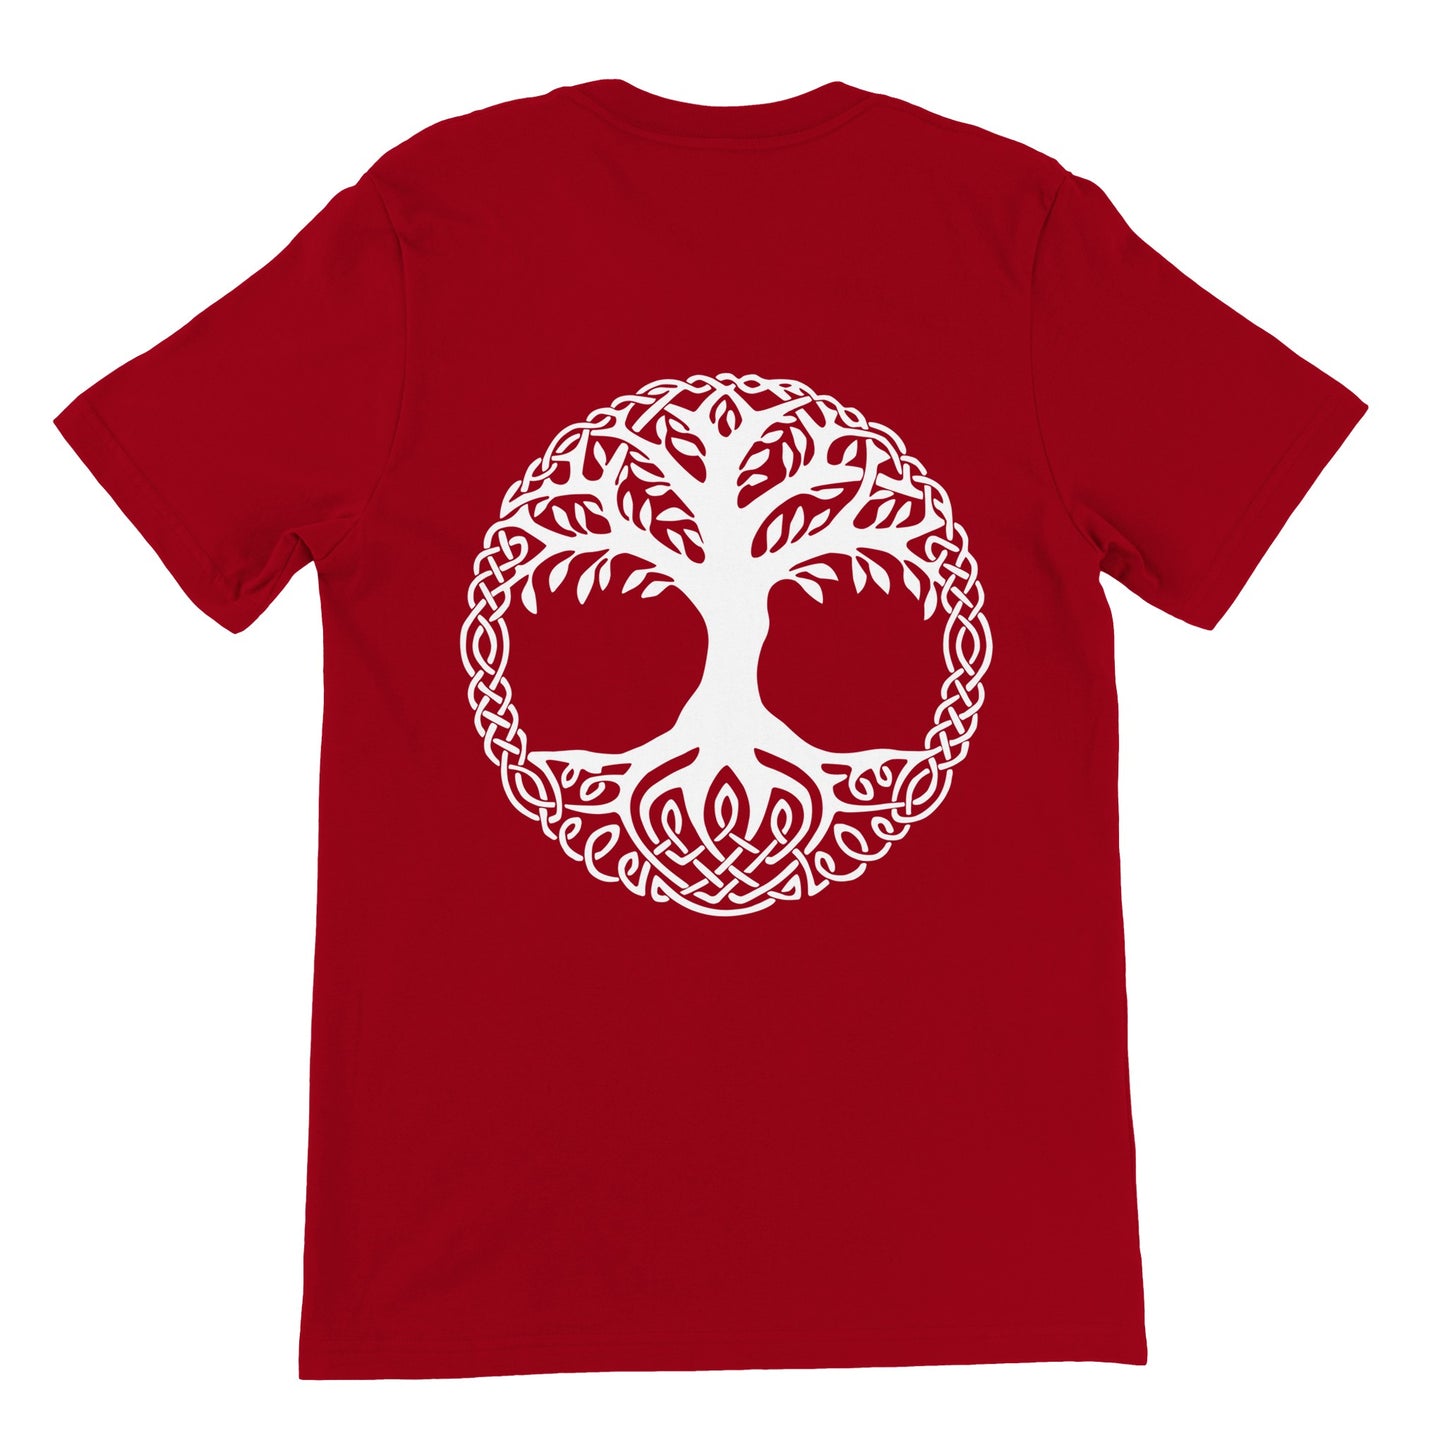 Yggdrasil, the tree of life T-shirt